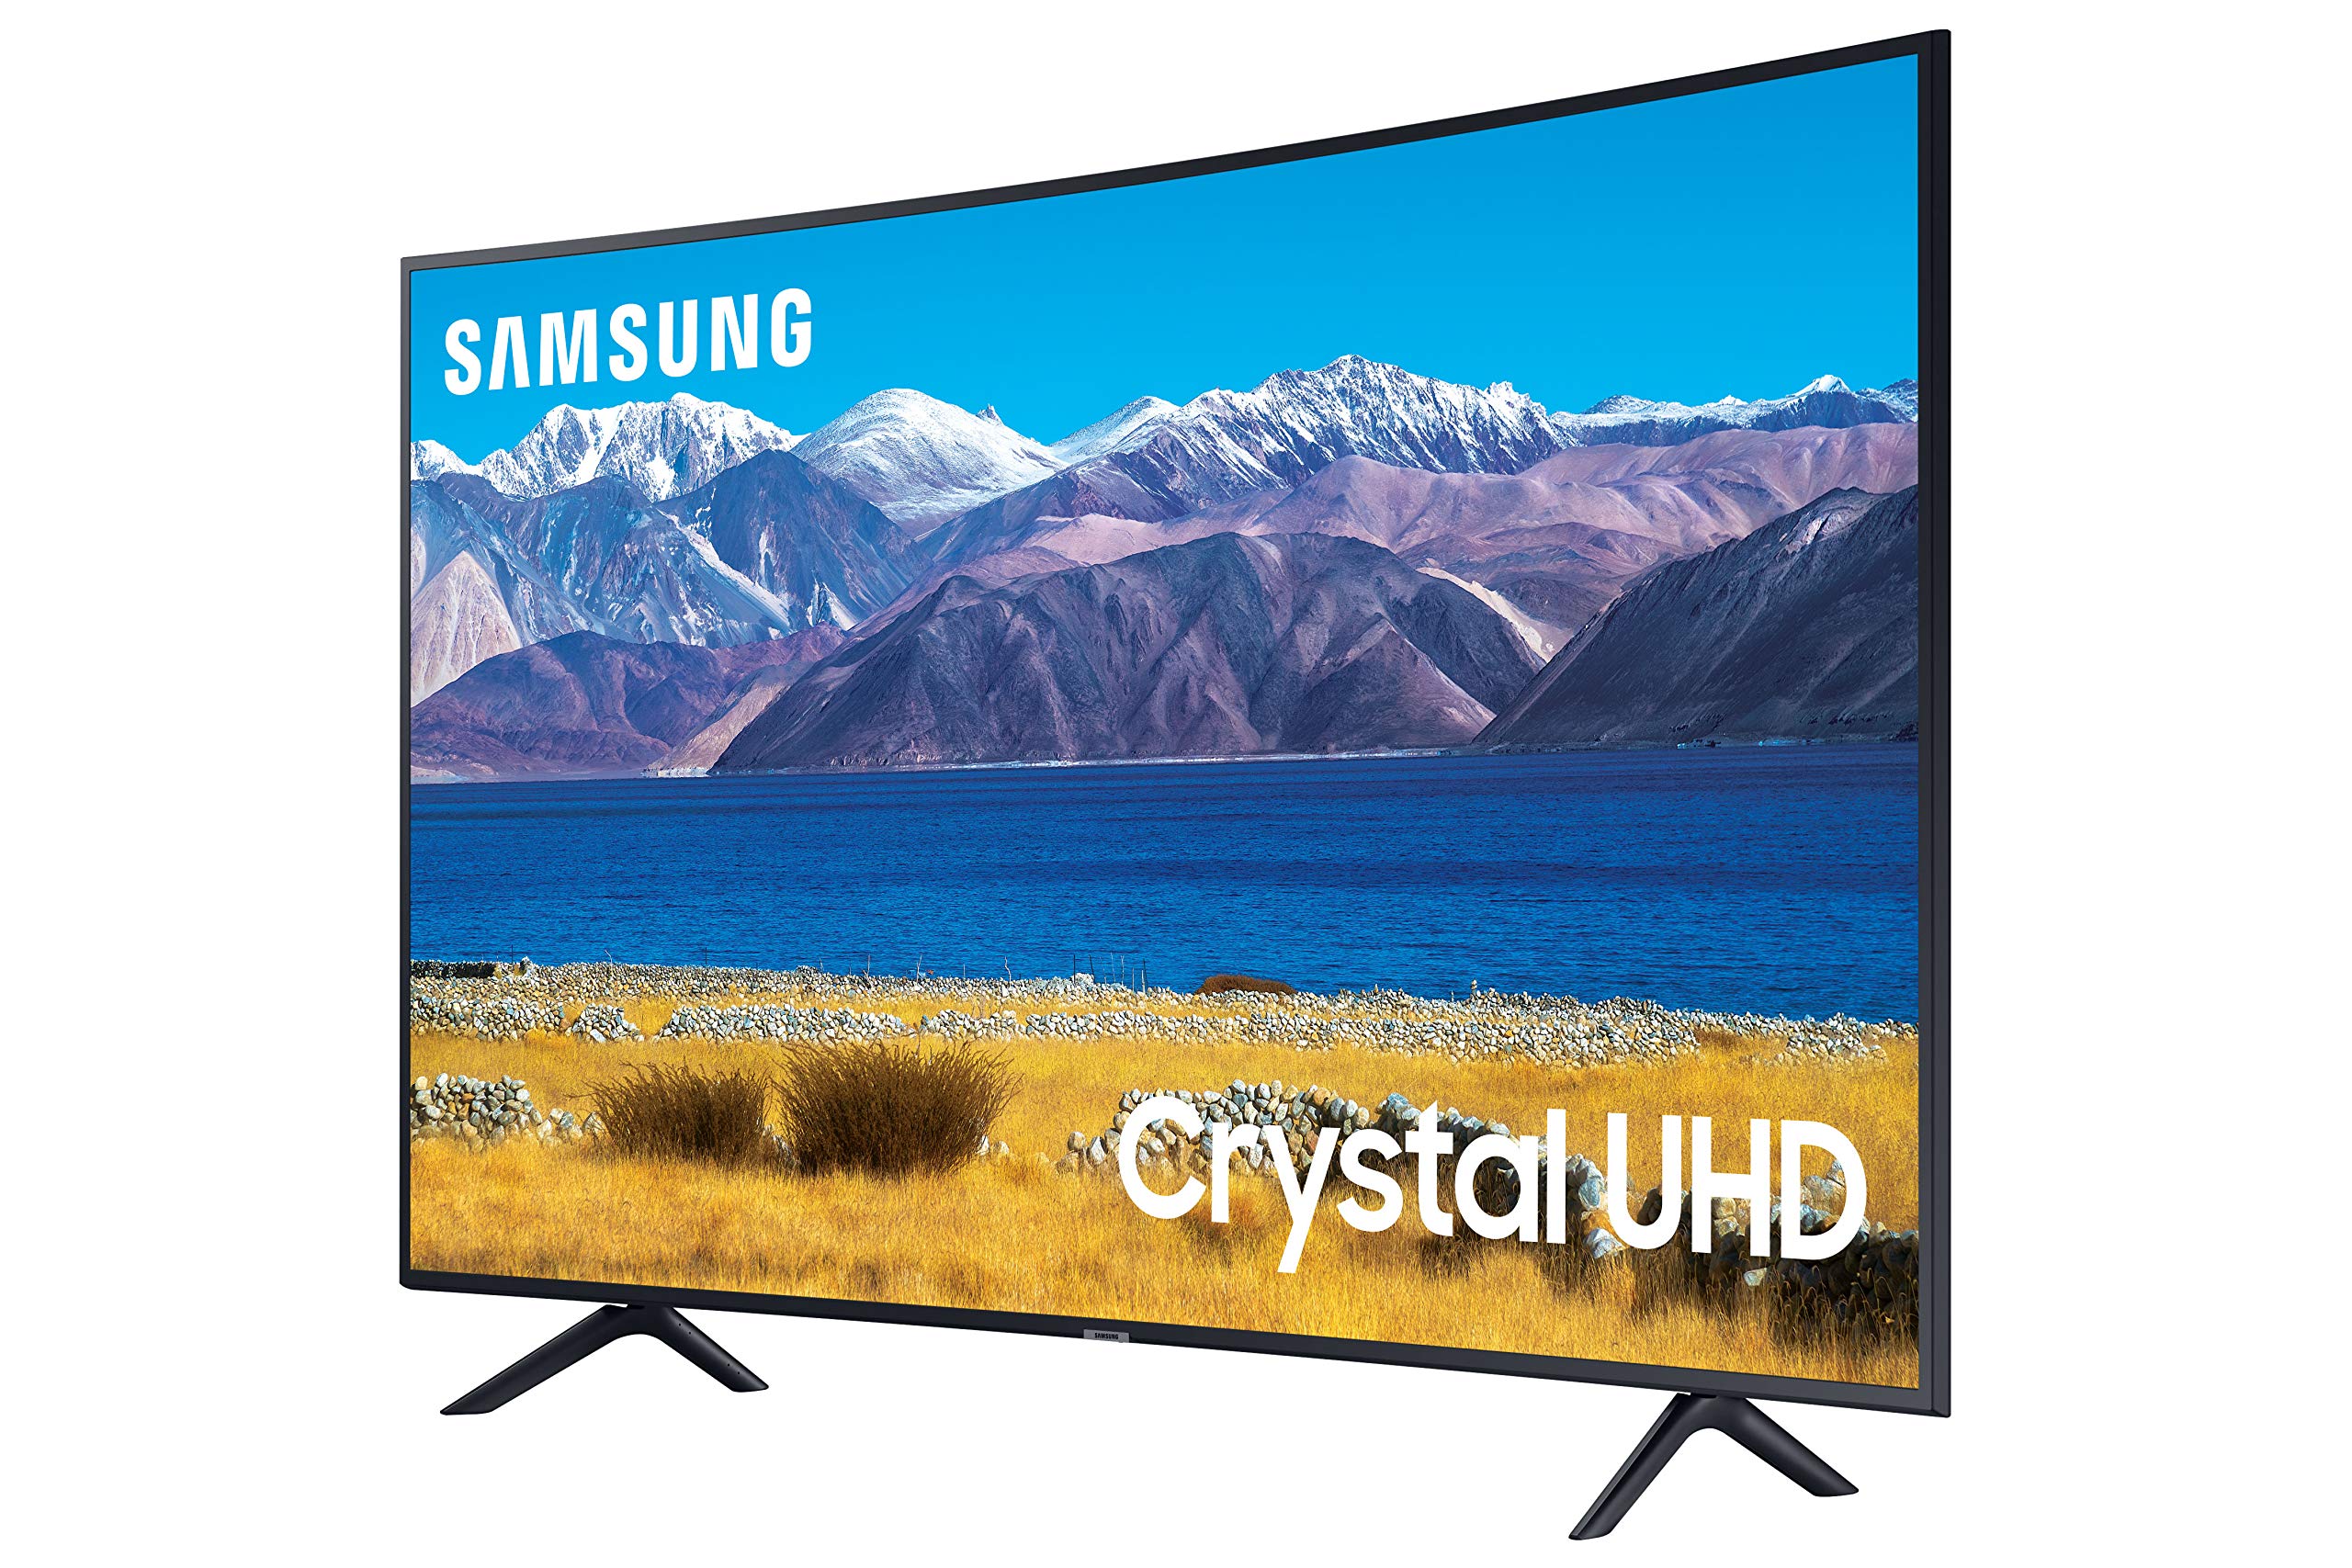 SAMSUNG 65-inch Class Curved UHD TU-8300 Series - 4K UHD HDR Smart TV With Alexa Built-in (UN65TU8300FXZA, 2020 Model), CHARCOAL BLACK